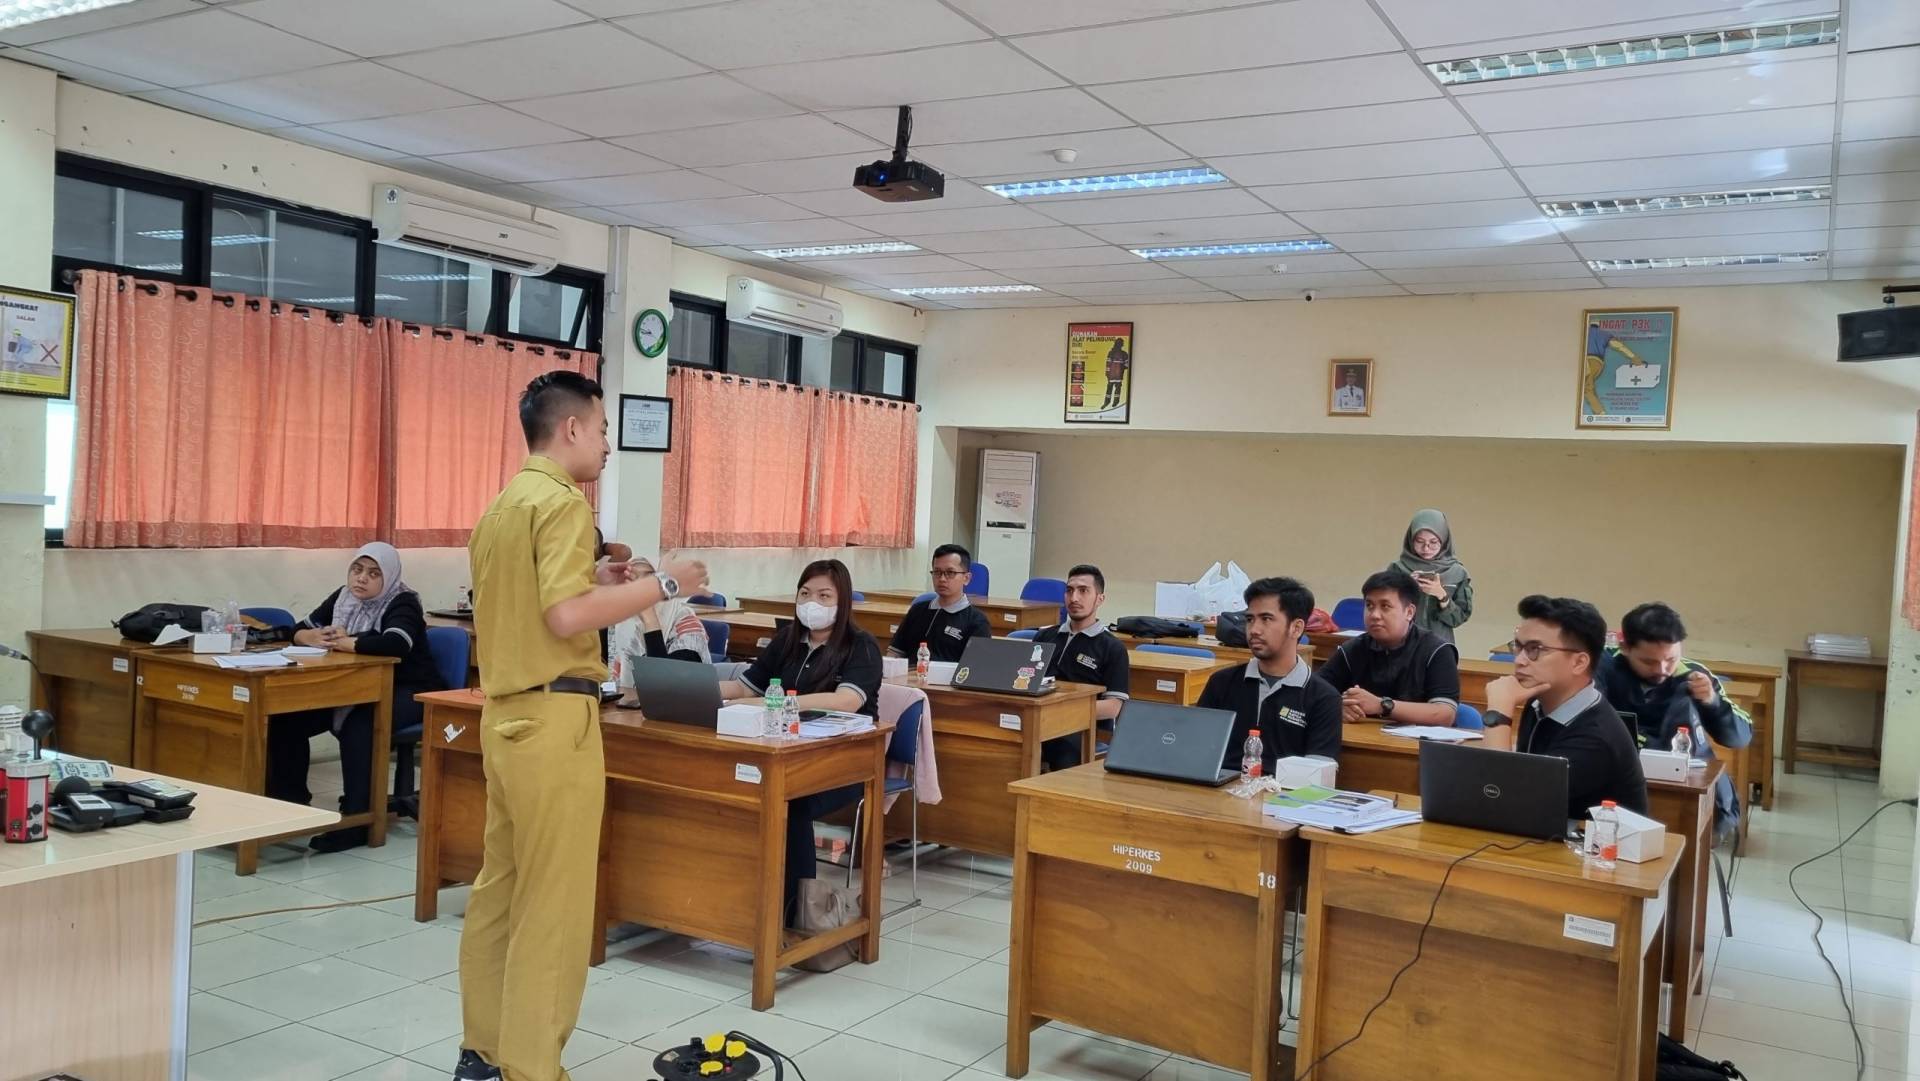 Tempat Pelatihan K3 Umum Online Di Hulu Sungai Tengah Kalimantan Selatan - Tempat Pelatihan K3 Umum Online Di Hulu Sungai Tengah Kalimantan Selatan